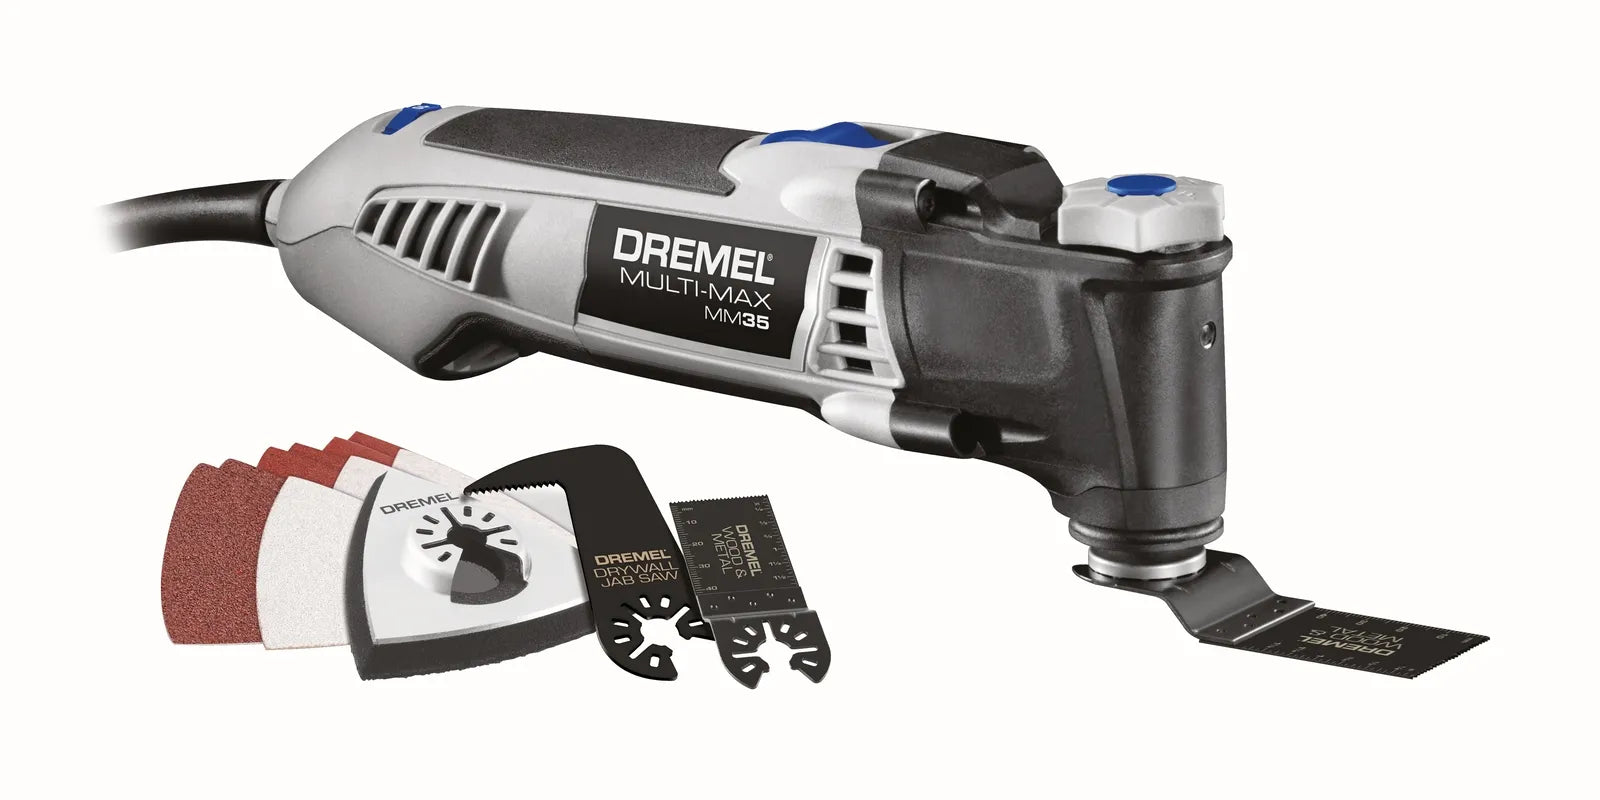 Dremel 3.5 AMPS Oscillating Tool Kit